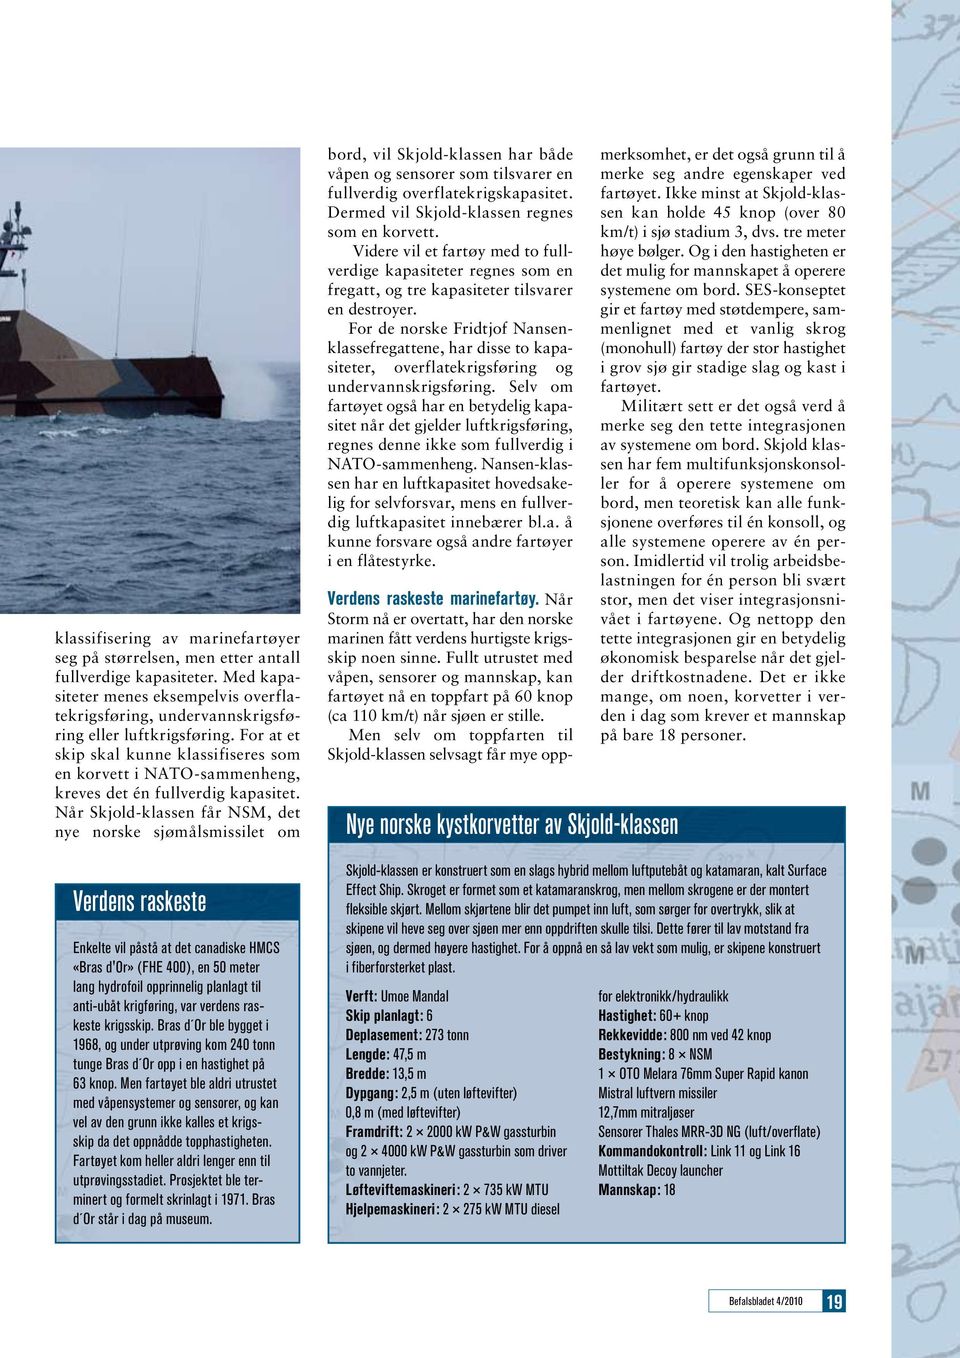 Når Skjold-klassen får NSM, det nye norske sjømålsmissilet om Verdens raskeste Enkelte vil påstå at det canadiske HMCS «Bras d'or» (FHE 400), en 50 meter lang hydrofoil opprinnelig planlagt til